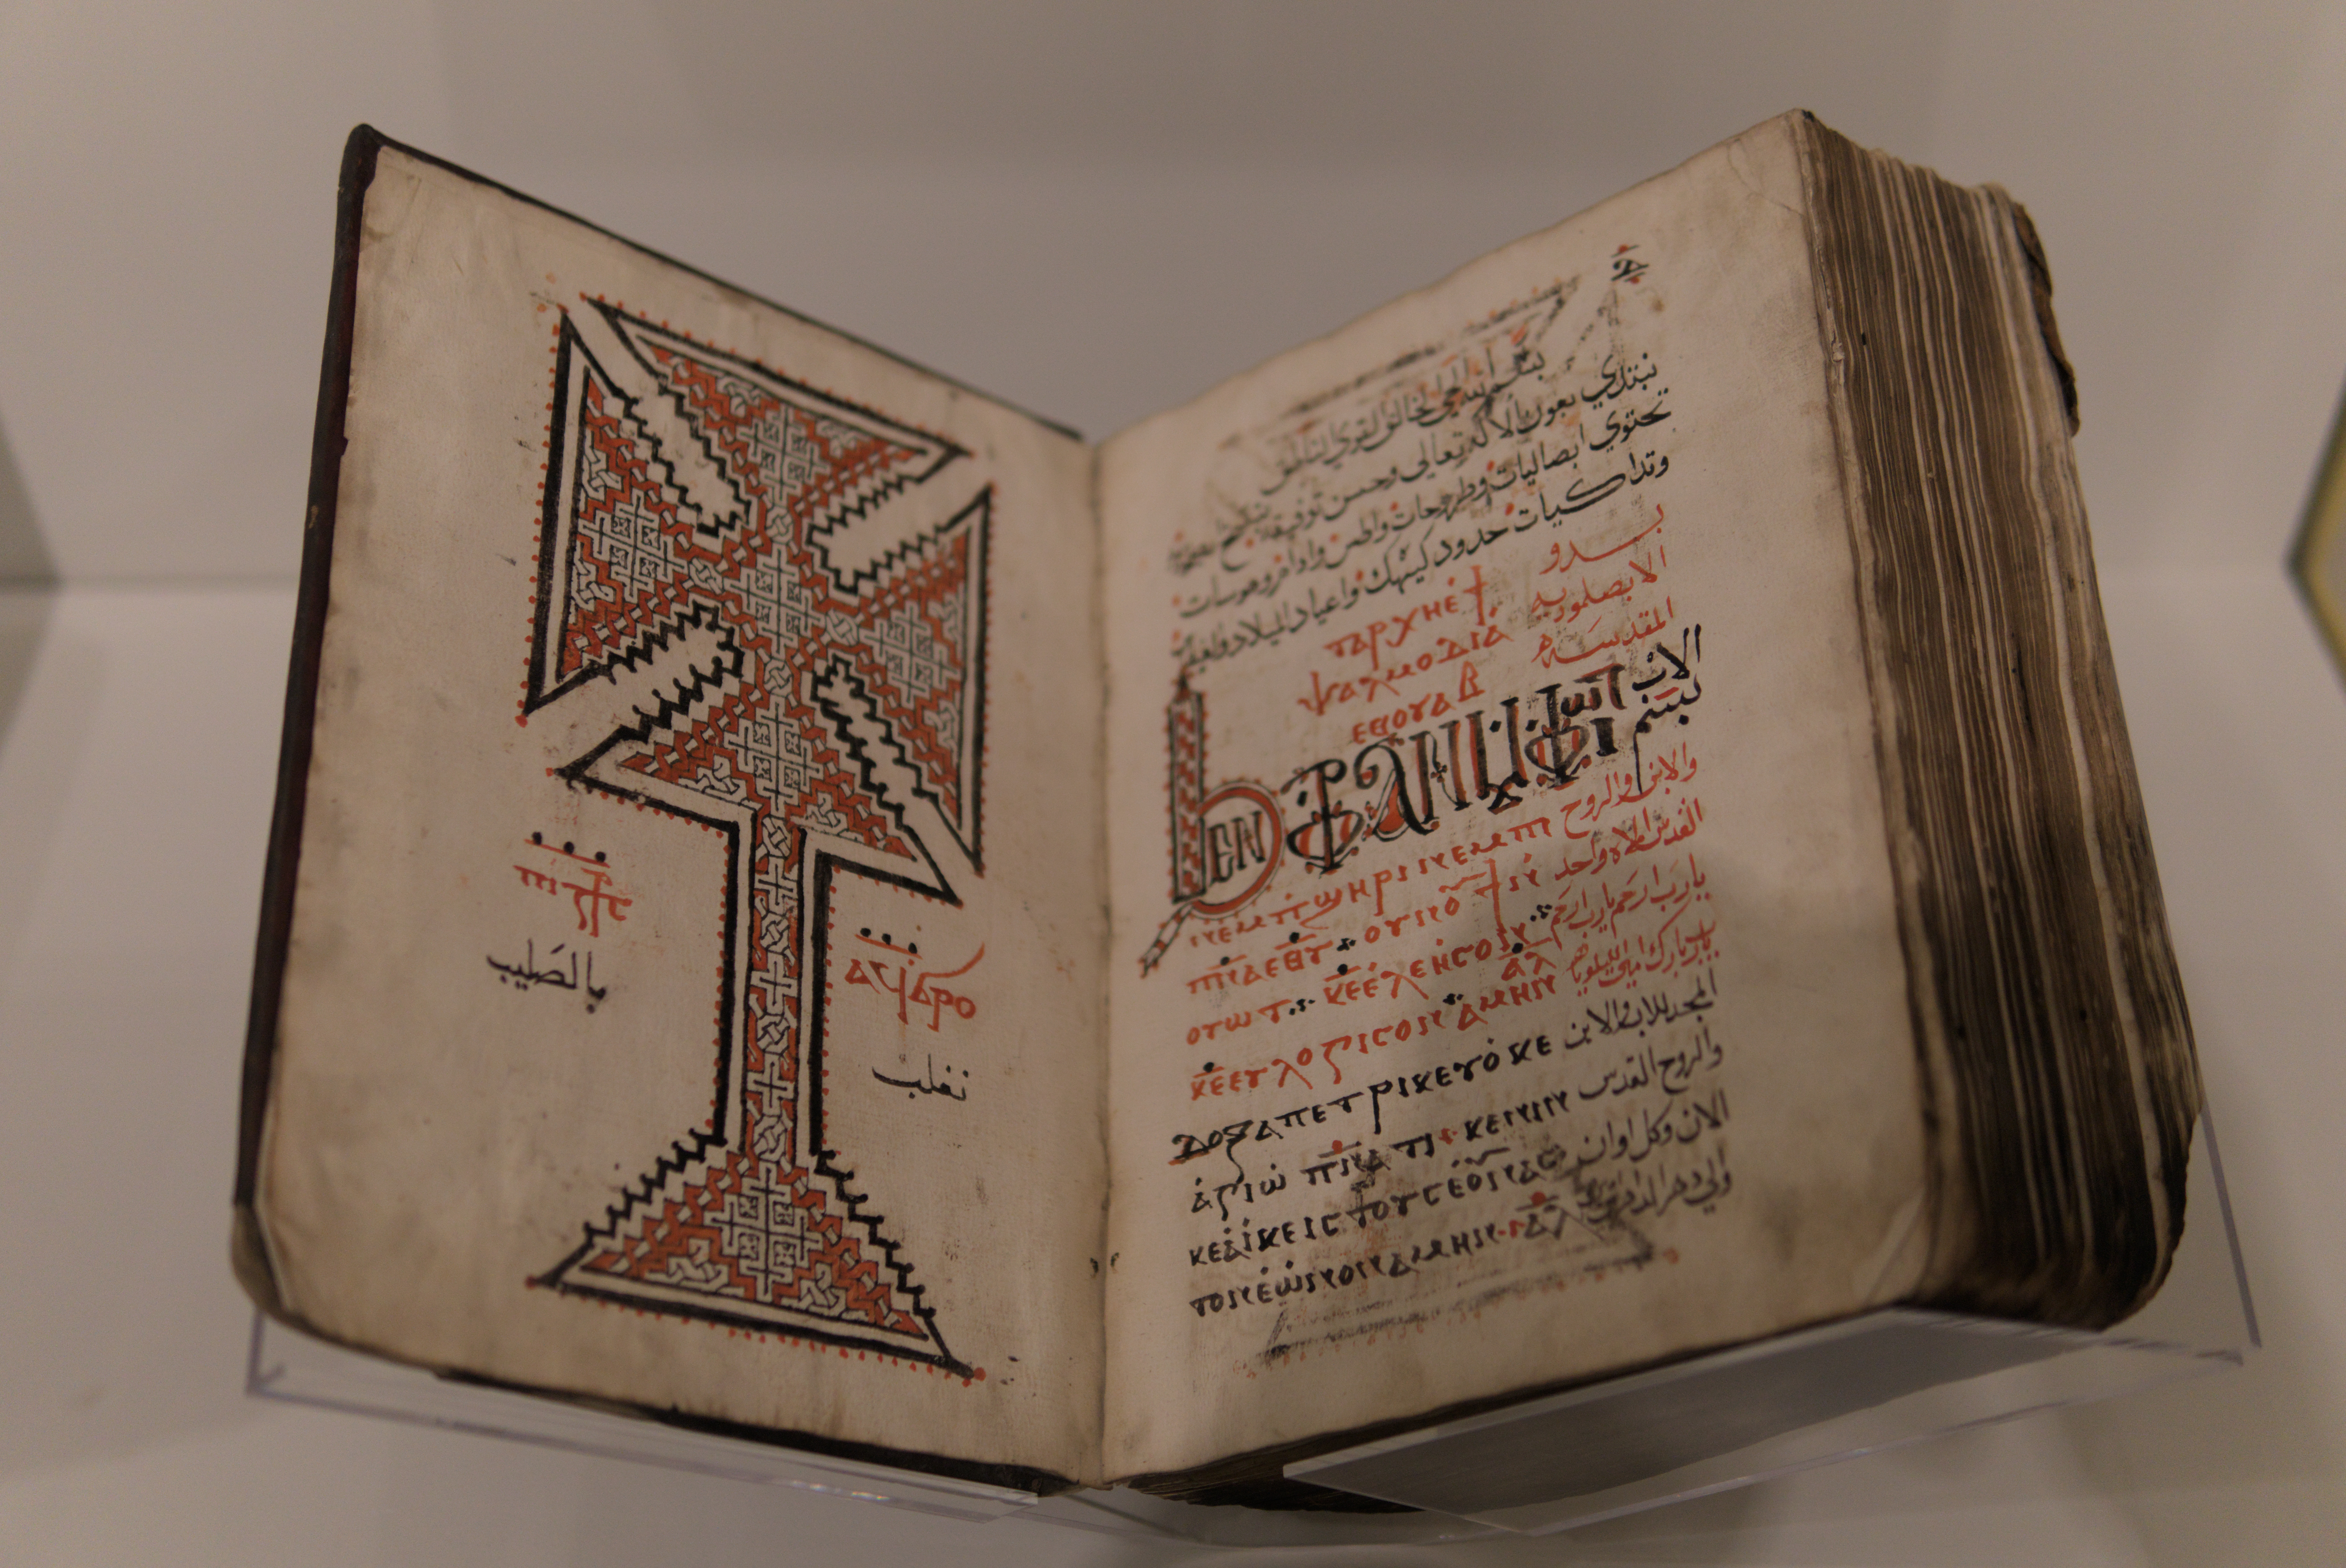 Coptic-Arabic Book of Prayer